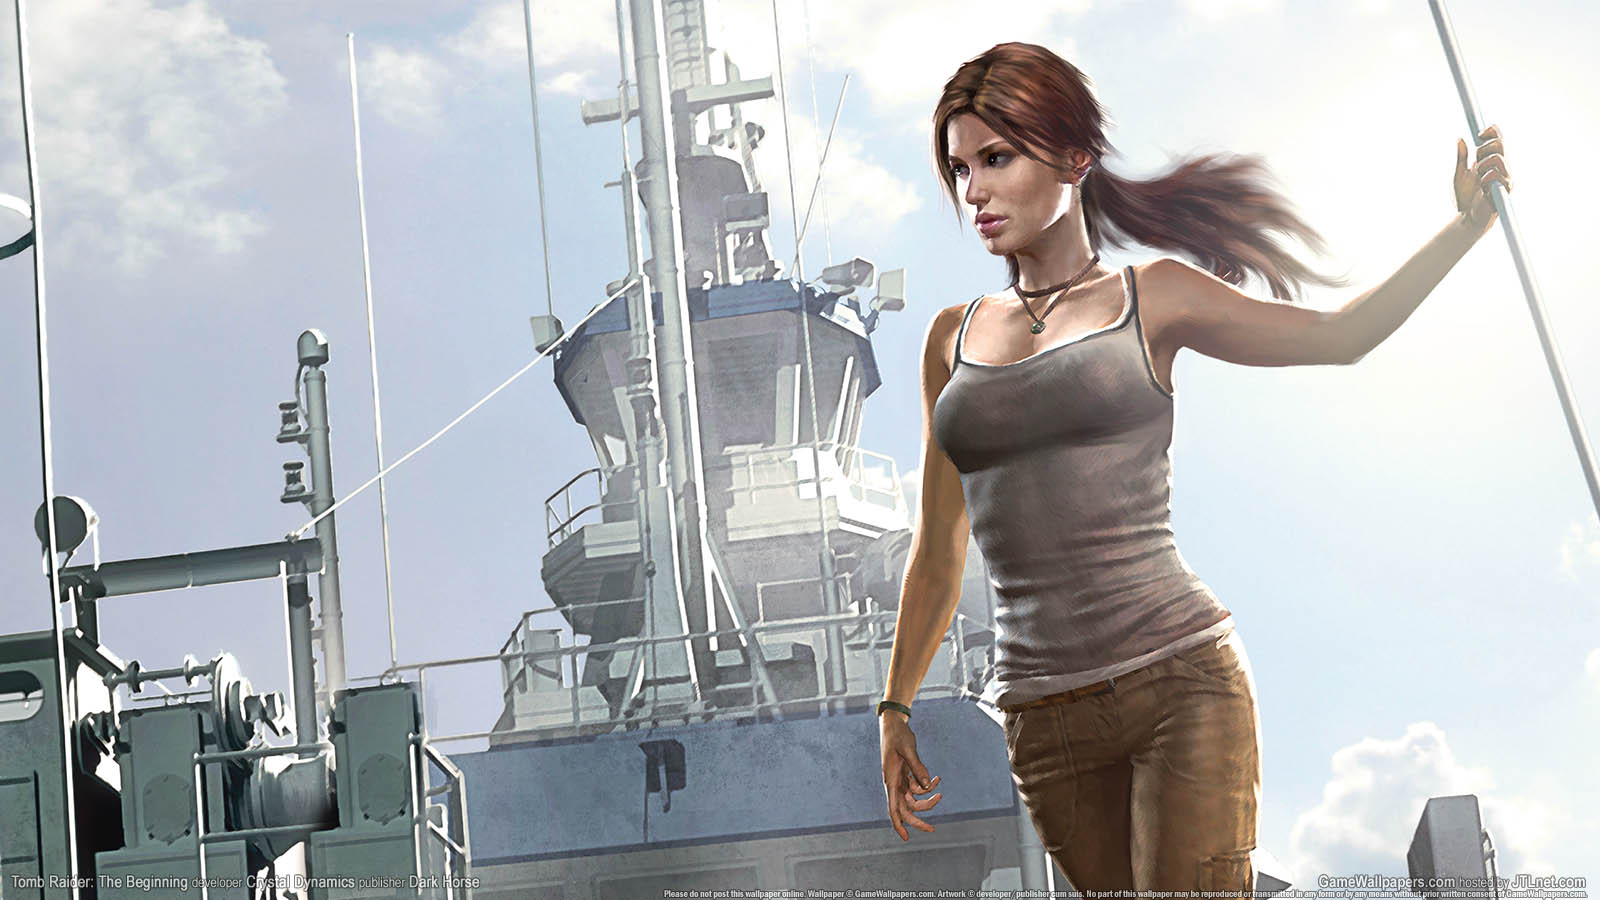 Tomb Raider: The Beginning fondo de escritorio 01 1600x900